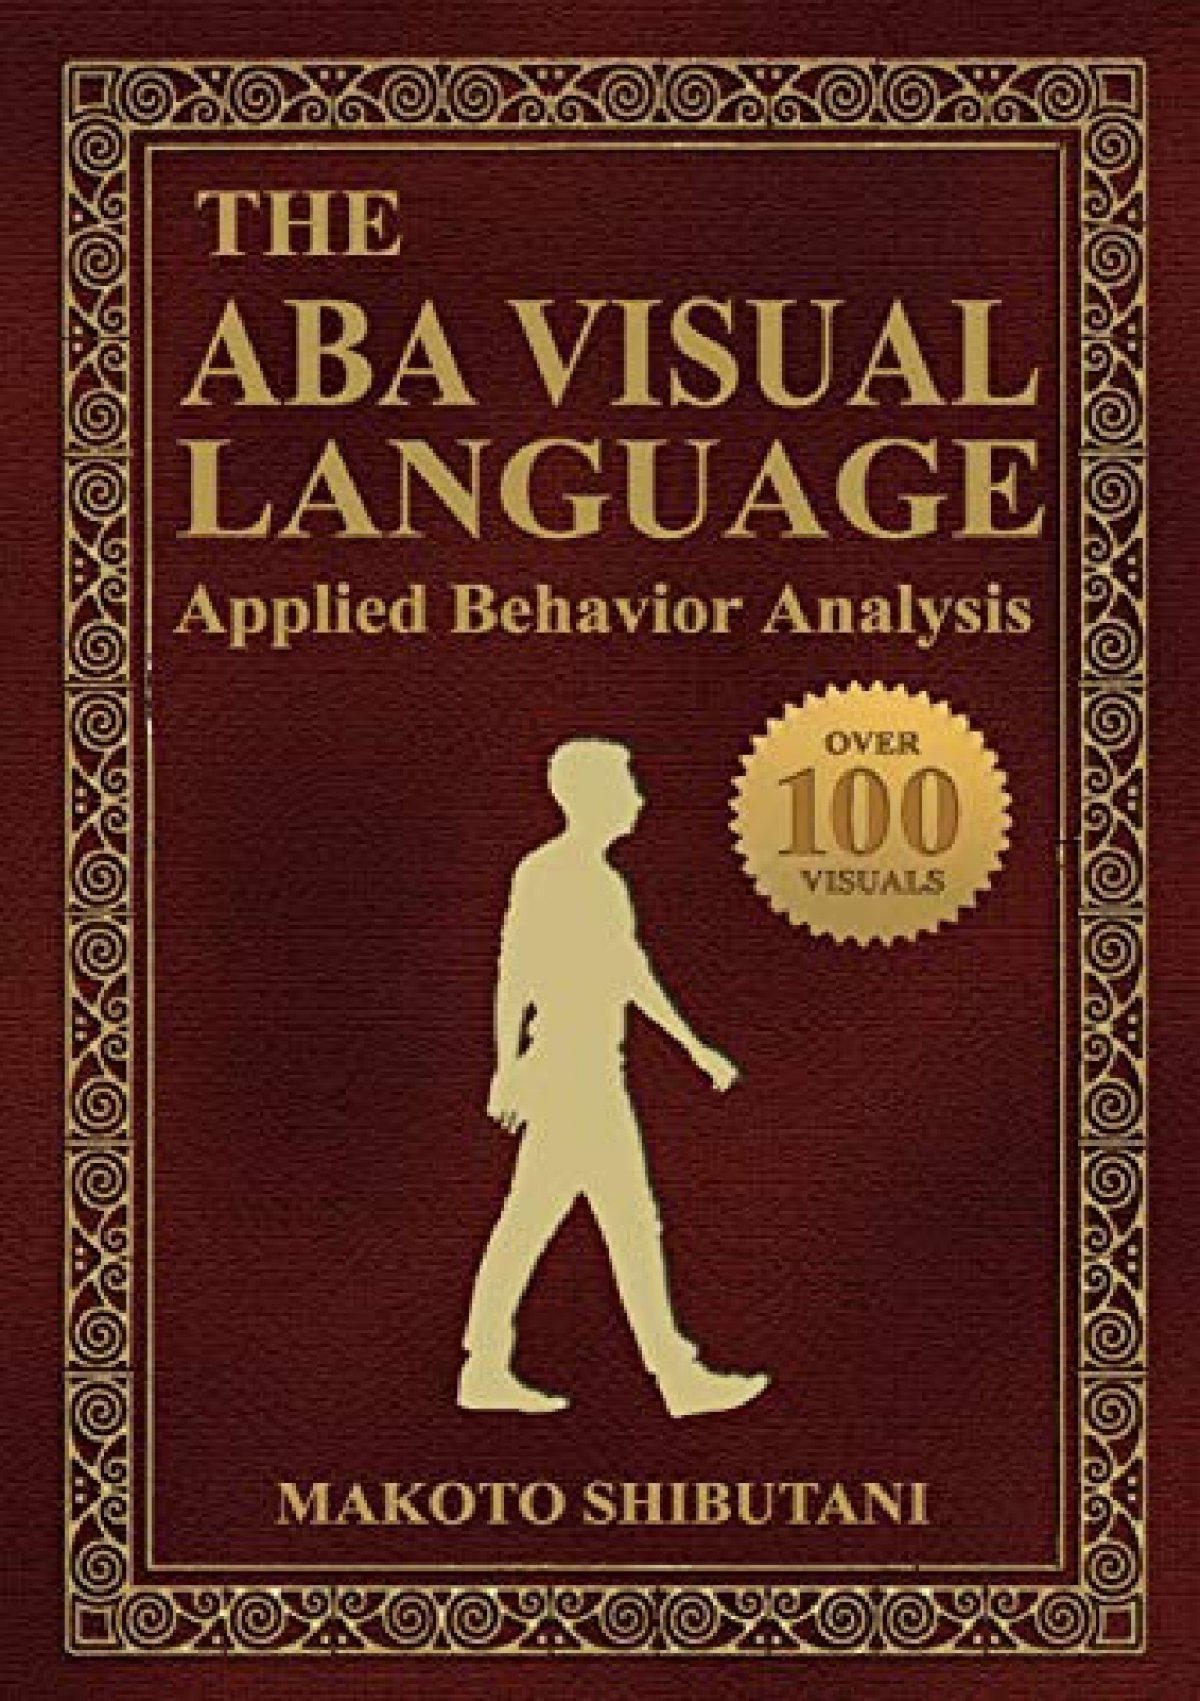 the aba visual language pdf free download